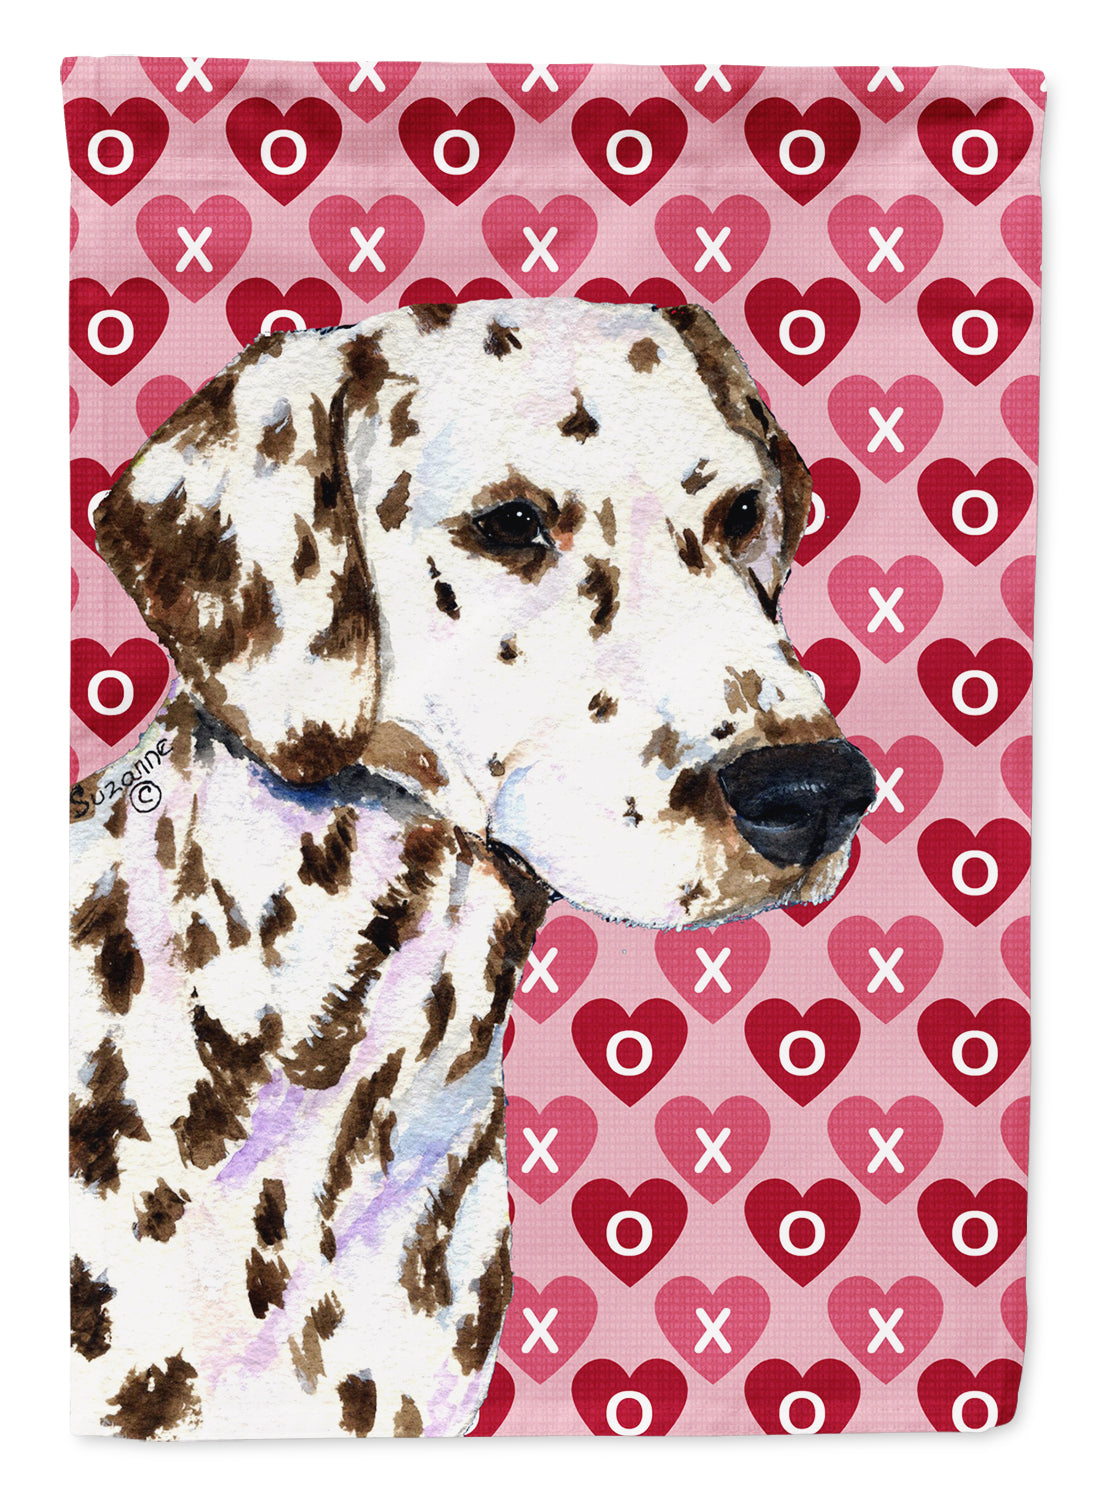 Dalmatian Hearts Love and Valentine's Day Portrait Flag Garden Size.